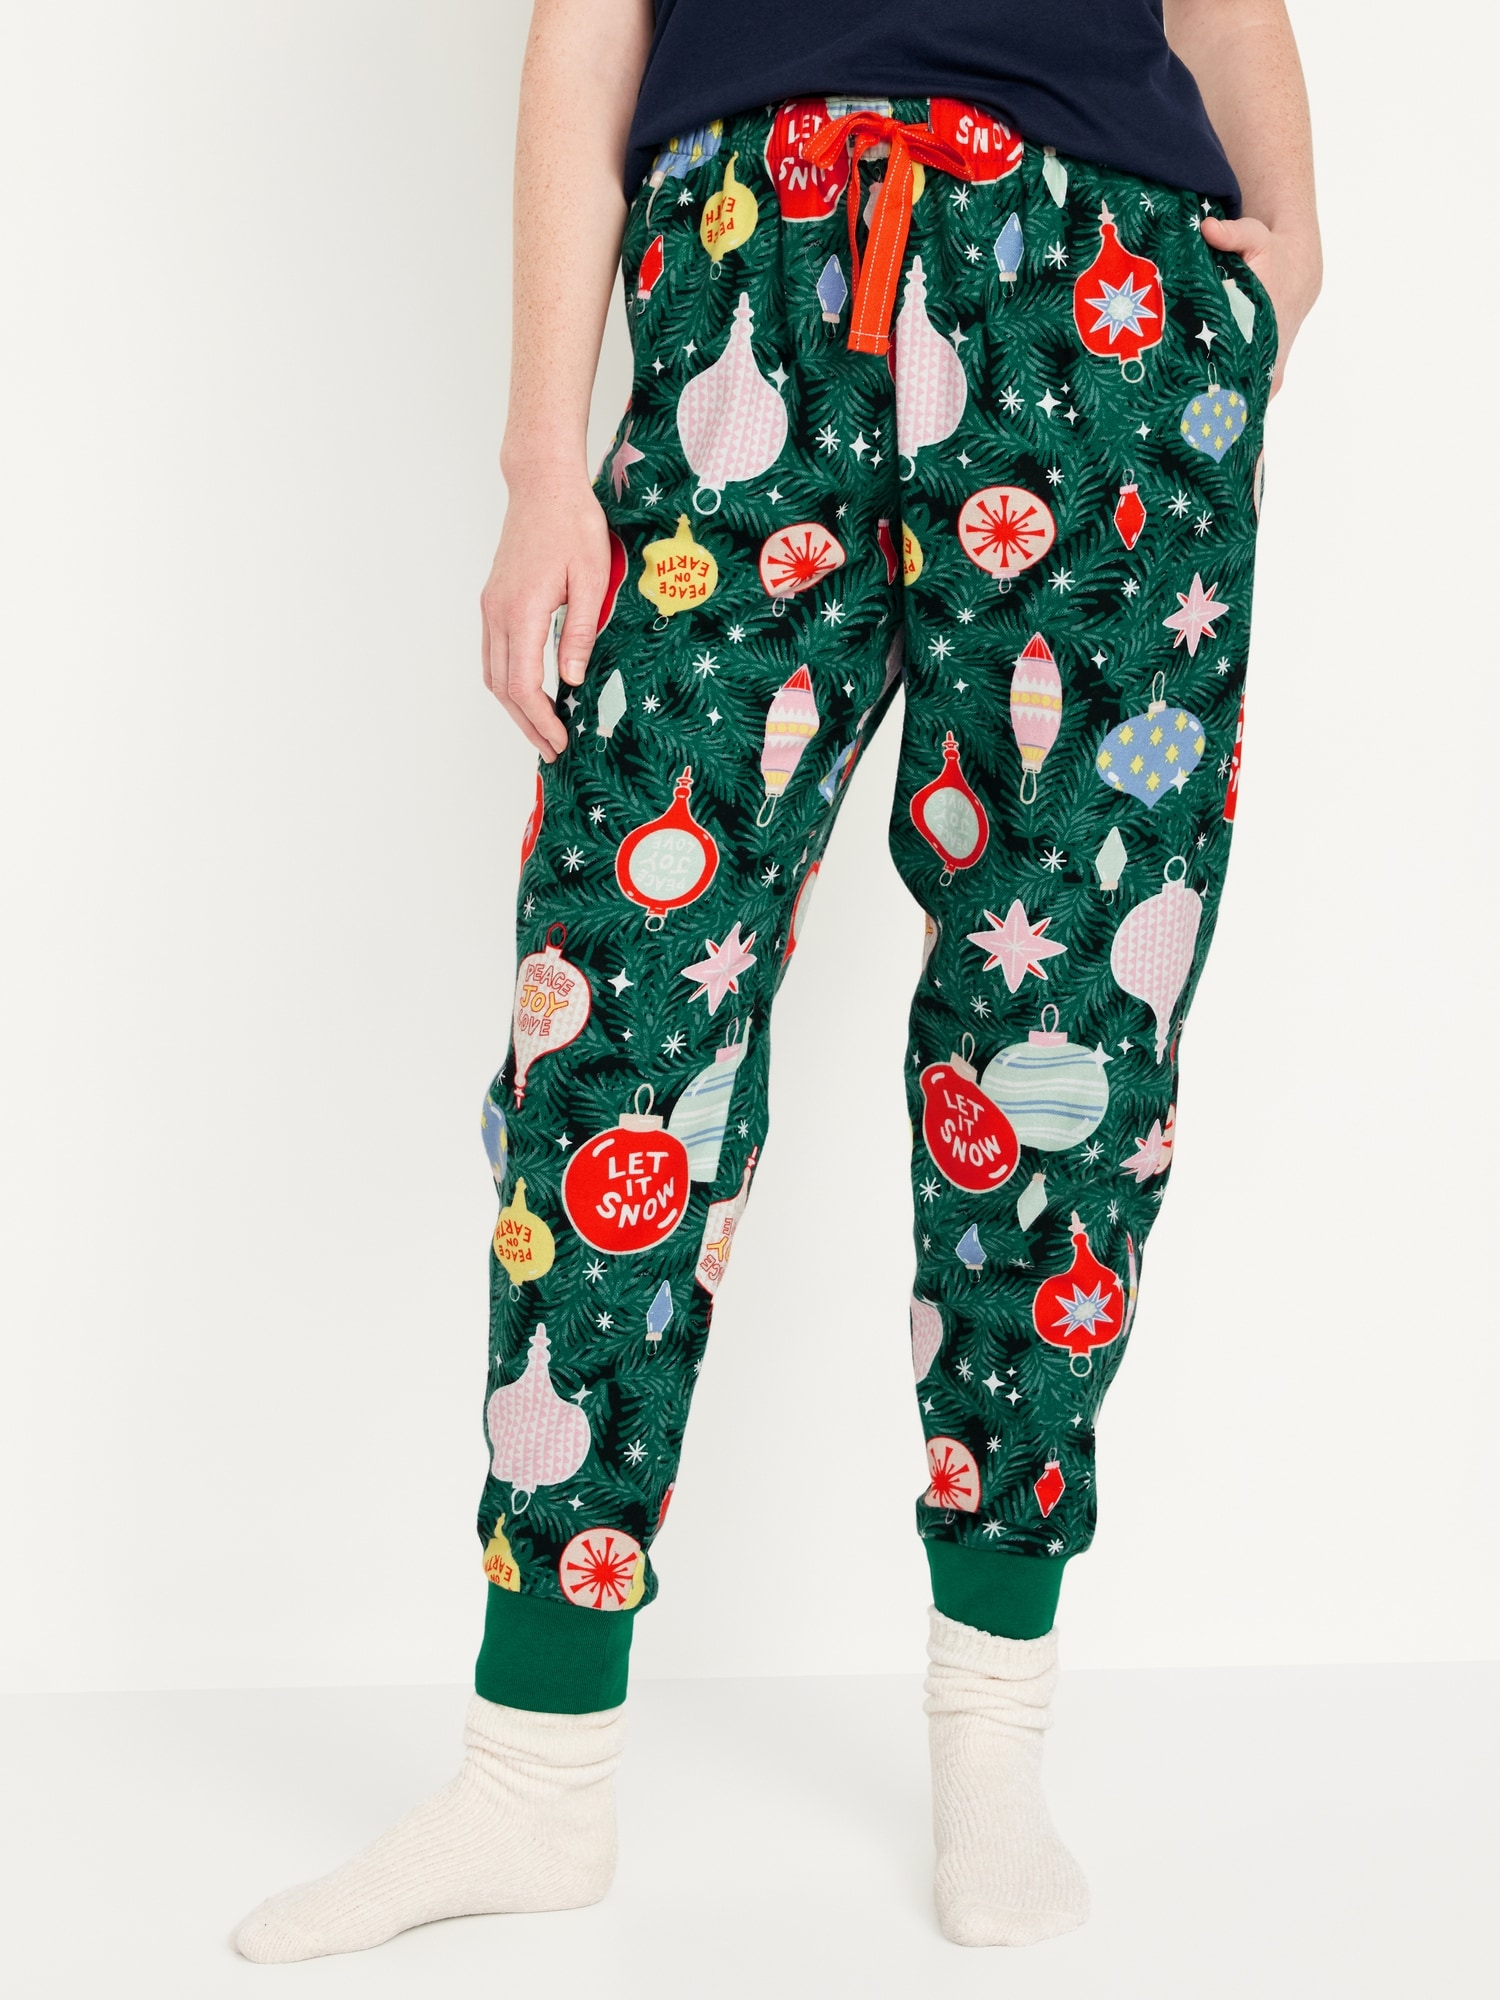 Matching Flannel Pajama Pants